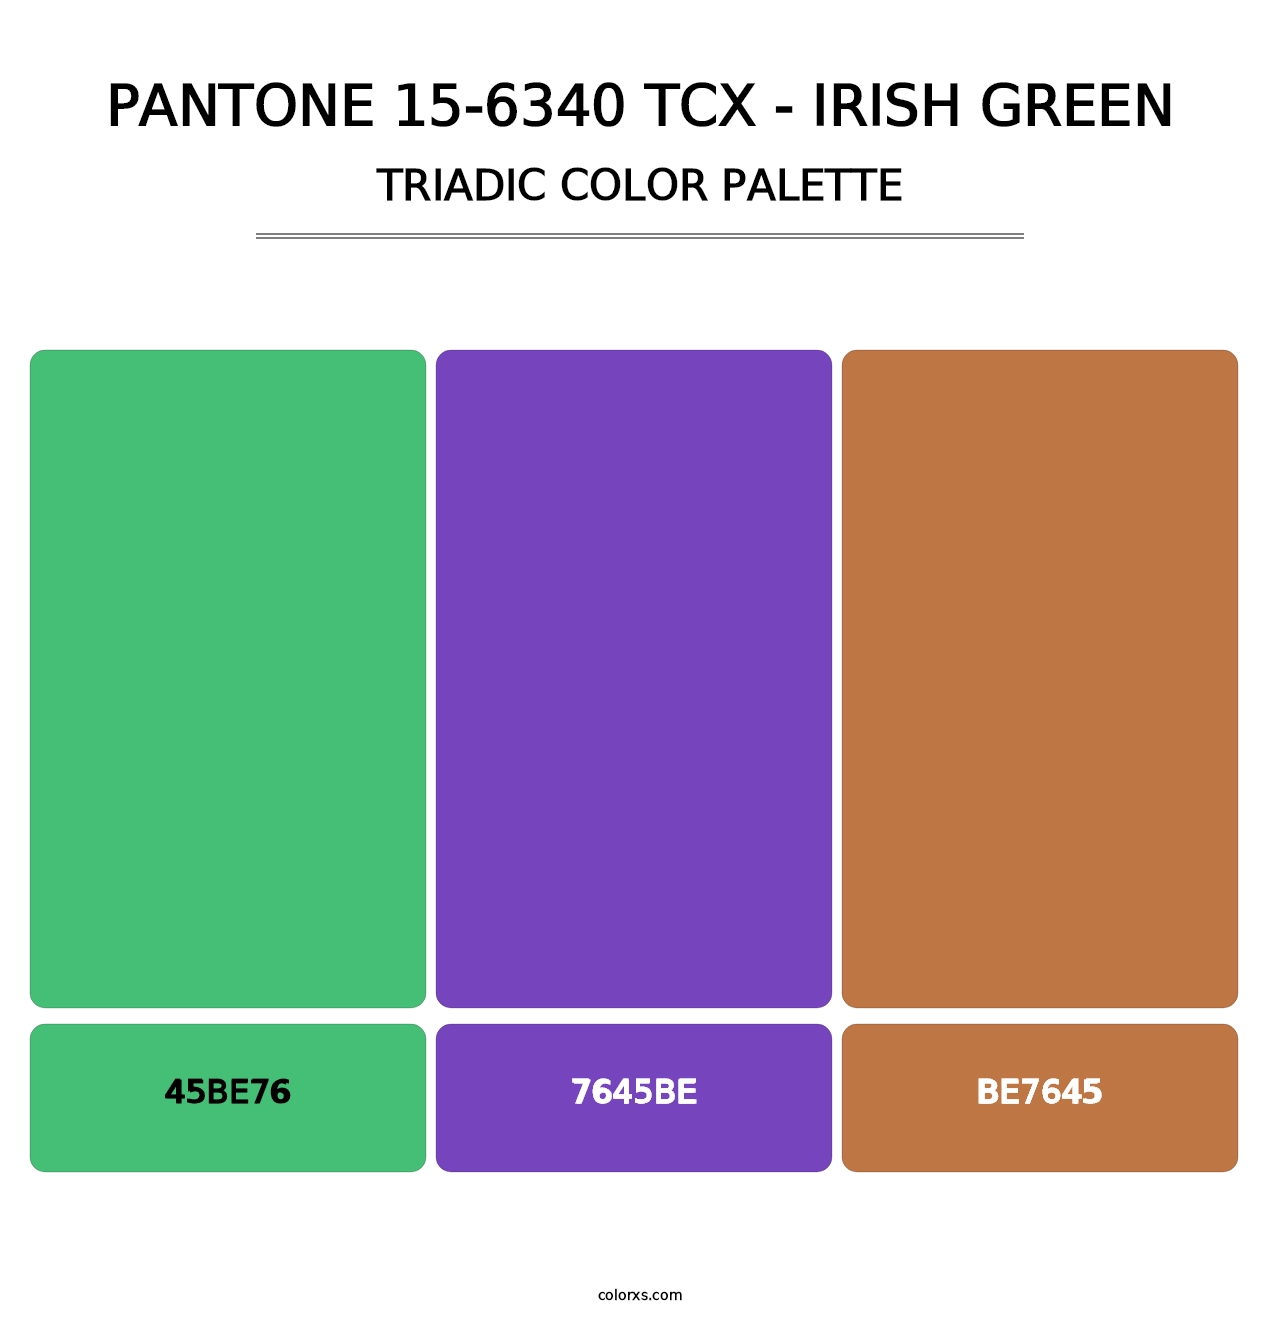 PANTONE 15-6340 TCX - Irish Green - Triadic Color Palette